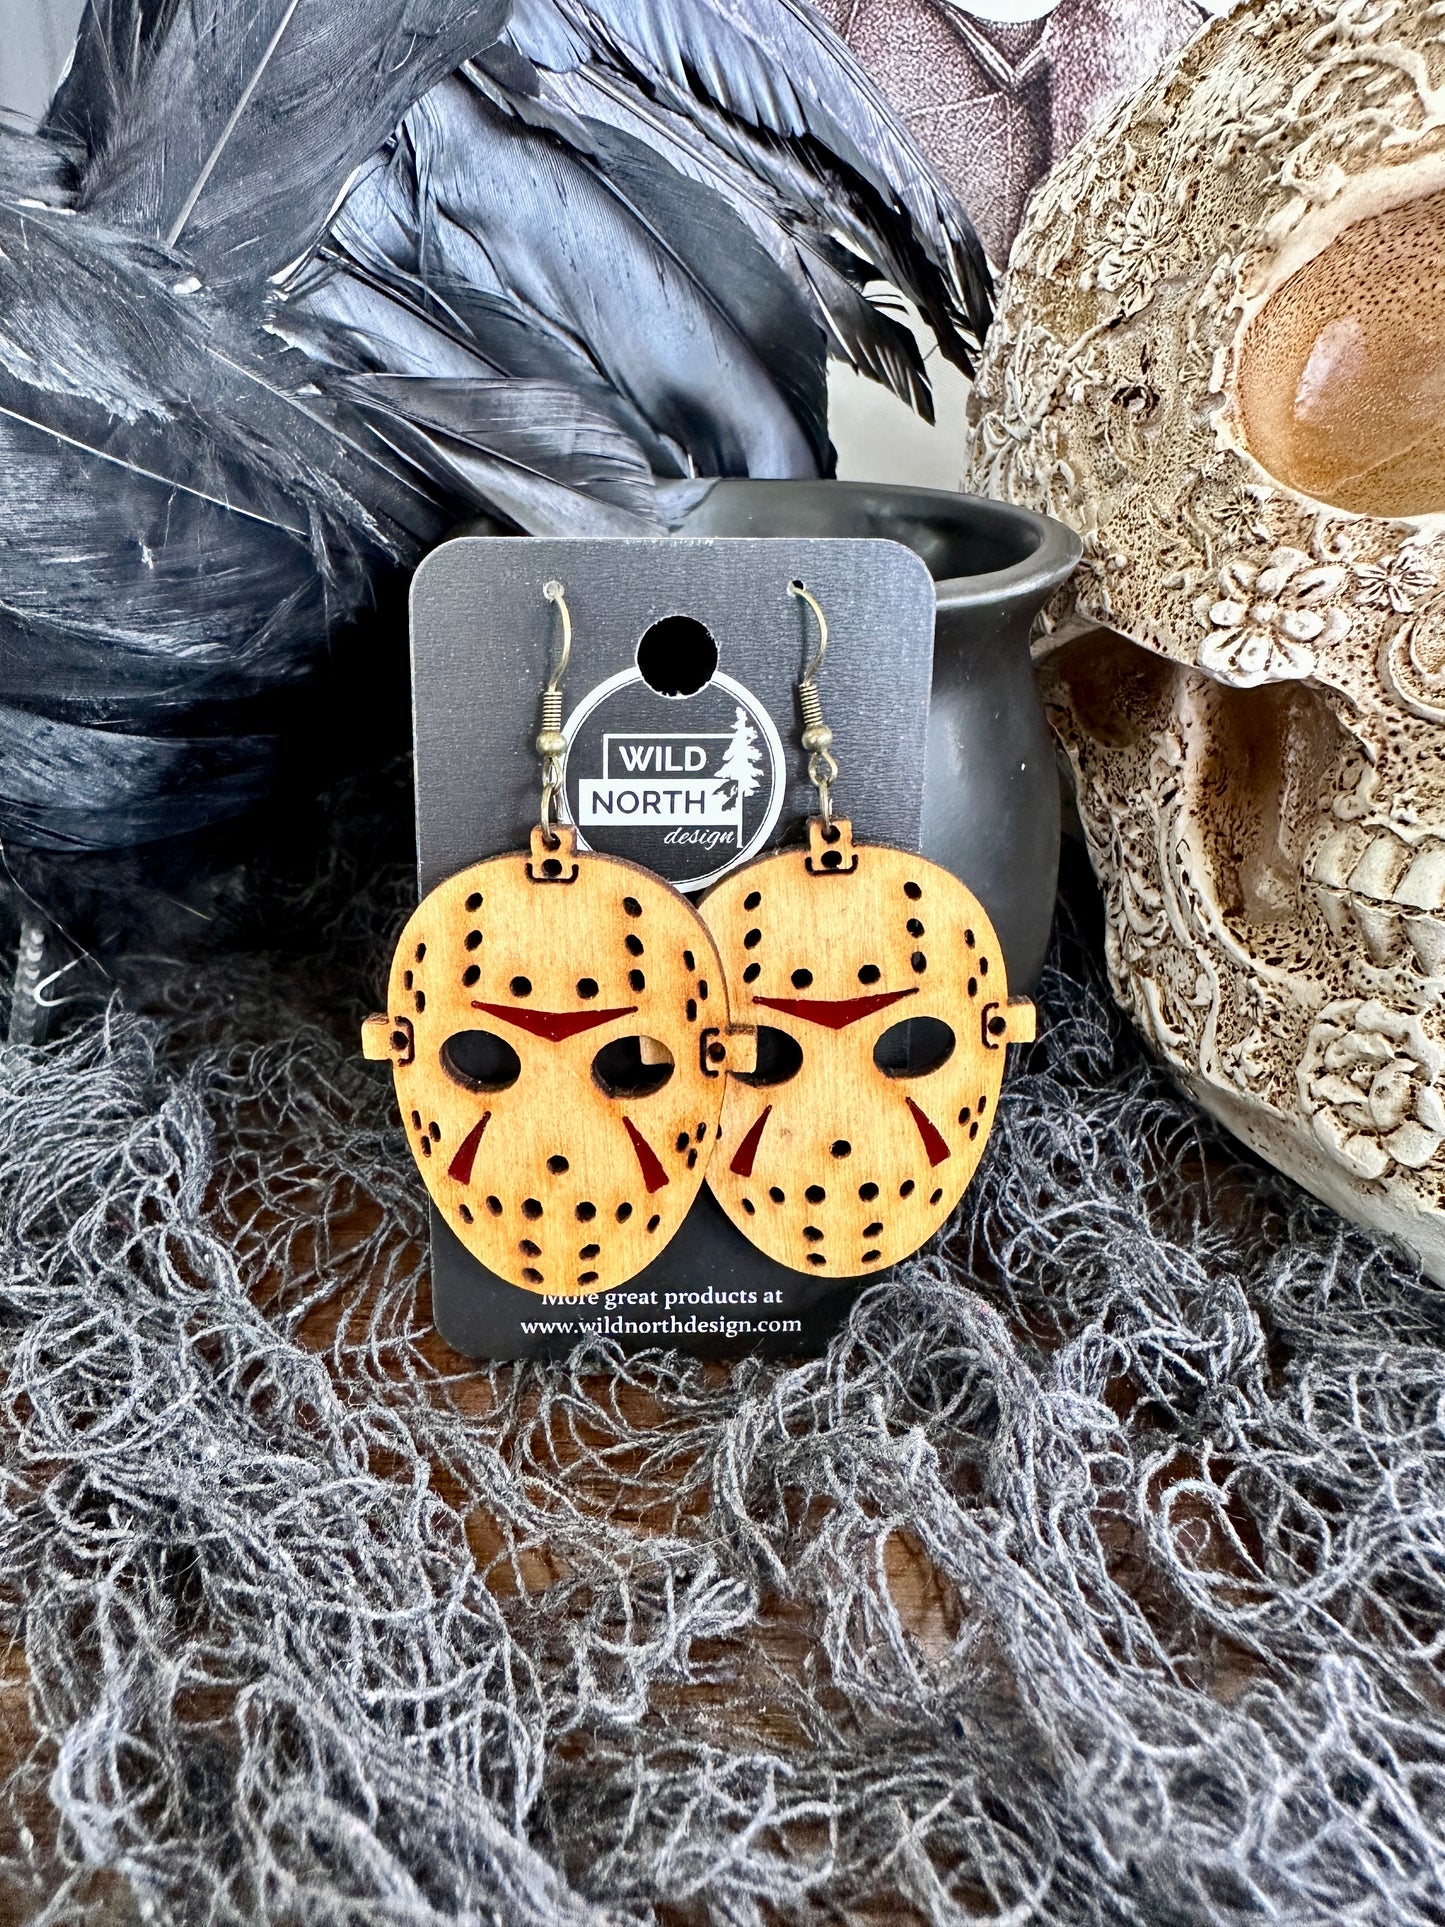 Jason Mask(Friday 13th) Halloween earrings